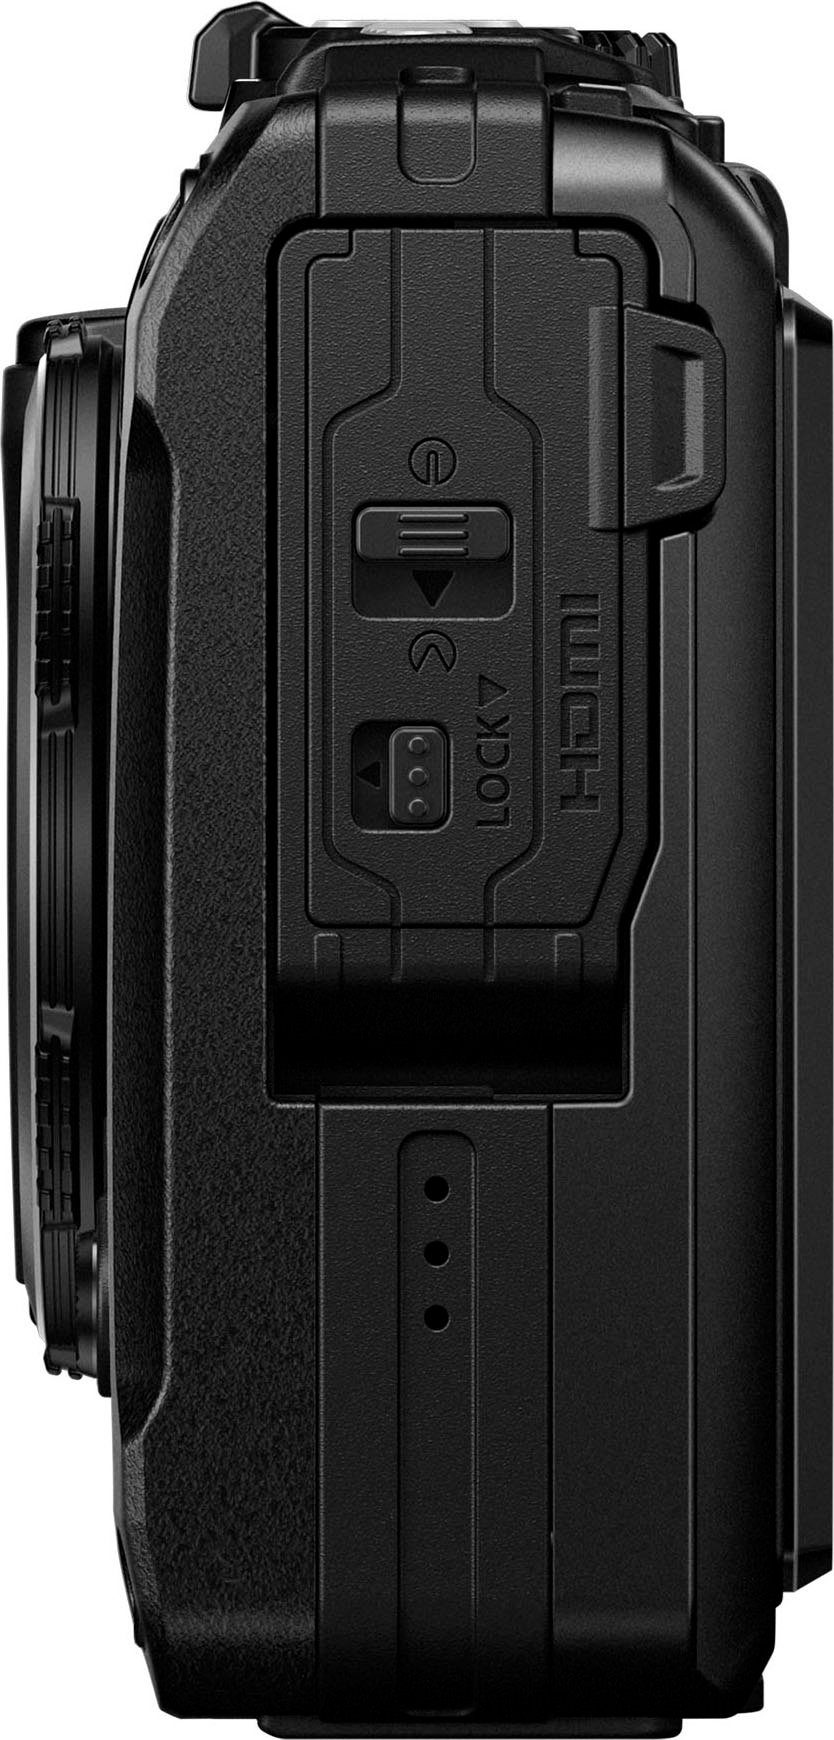 Olympus Tough TG-7 WLAN Kompaktkamera 4x (12 MP, (Wi-Fi) Bluetooth, schwarz Zoom, opt